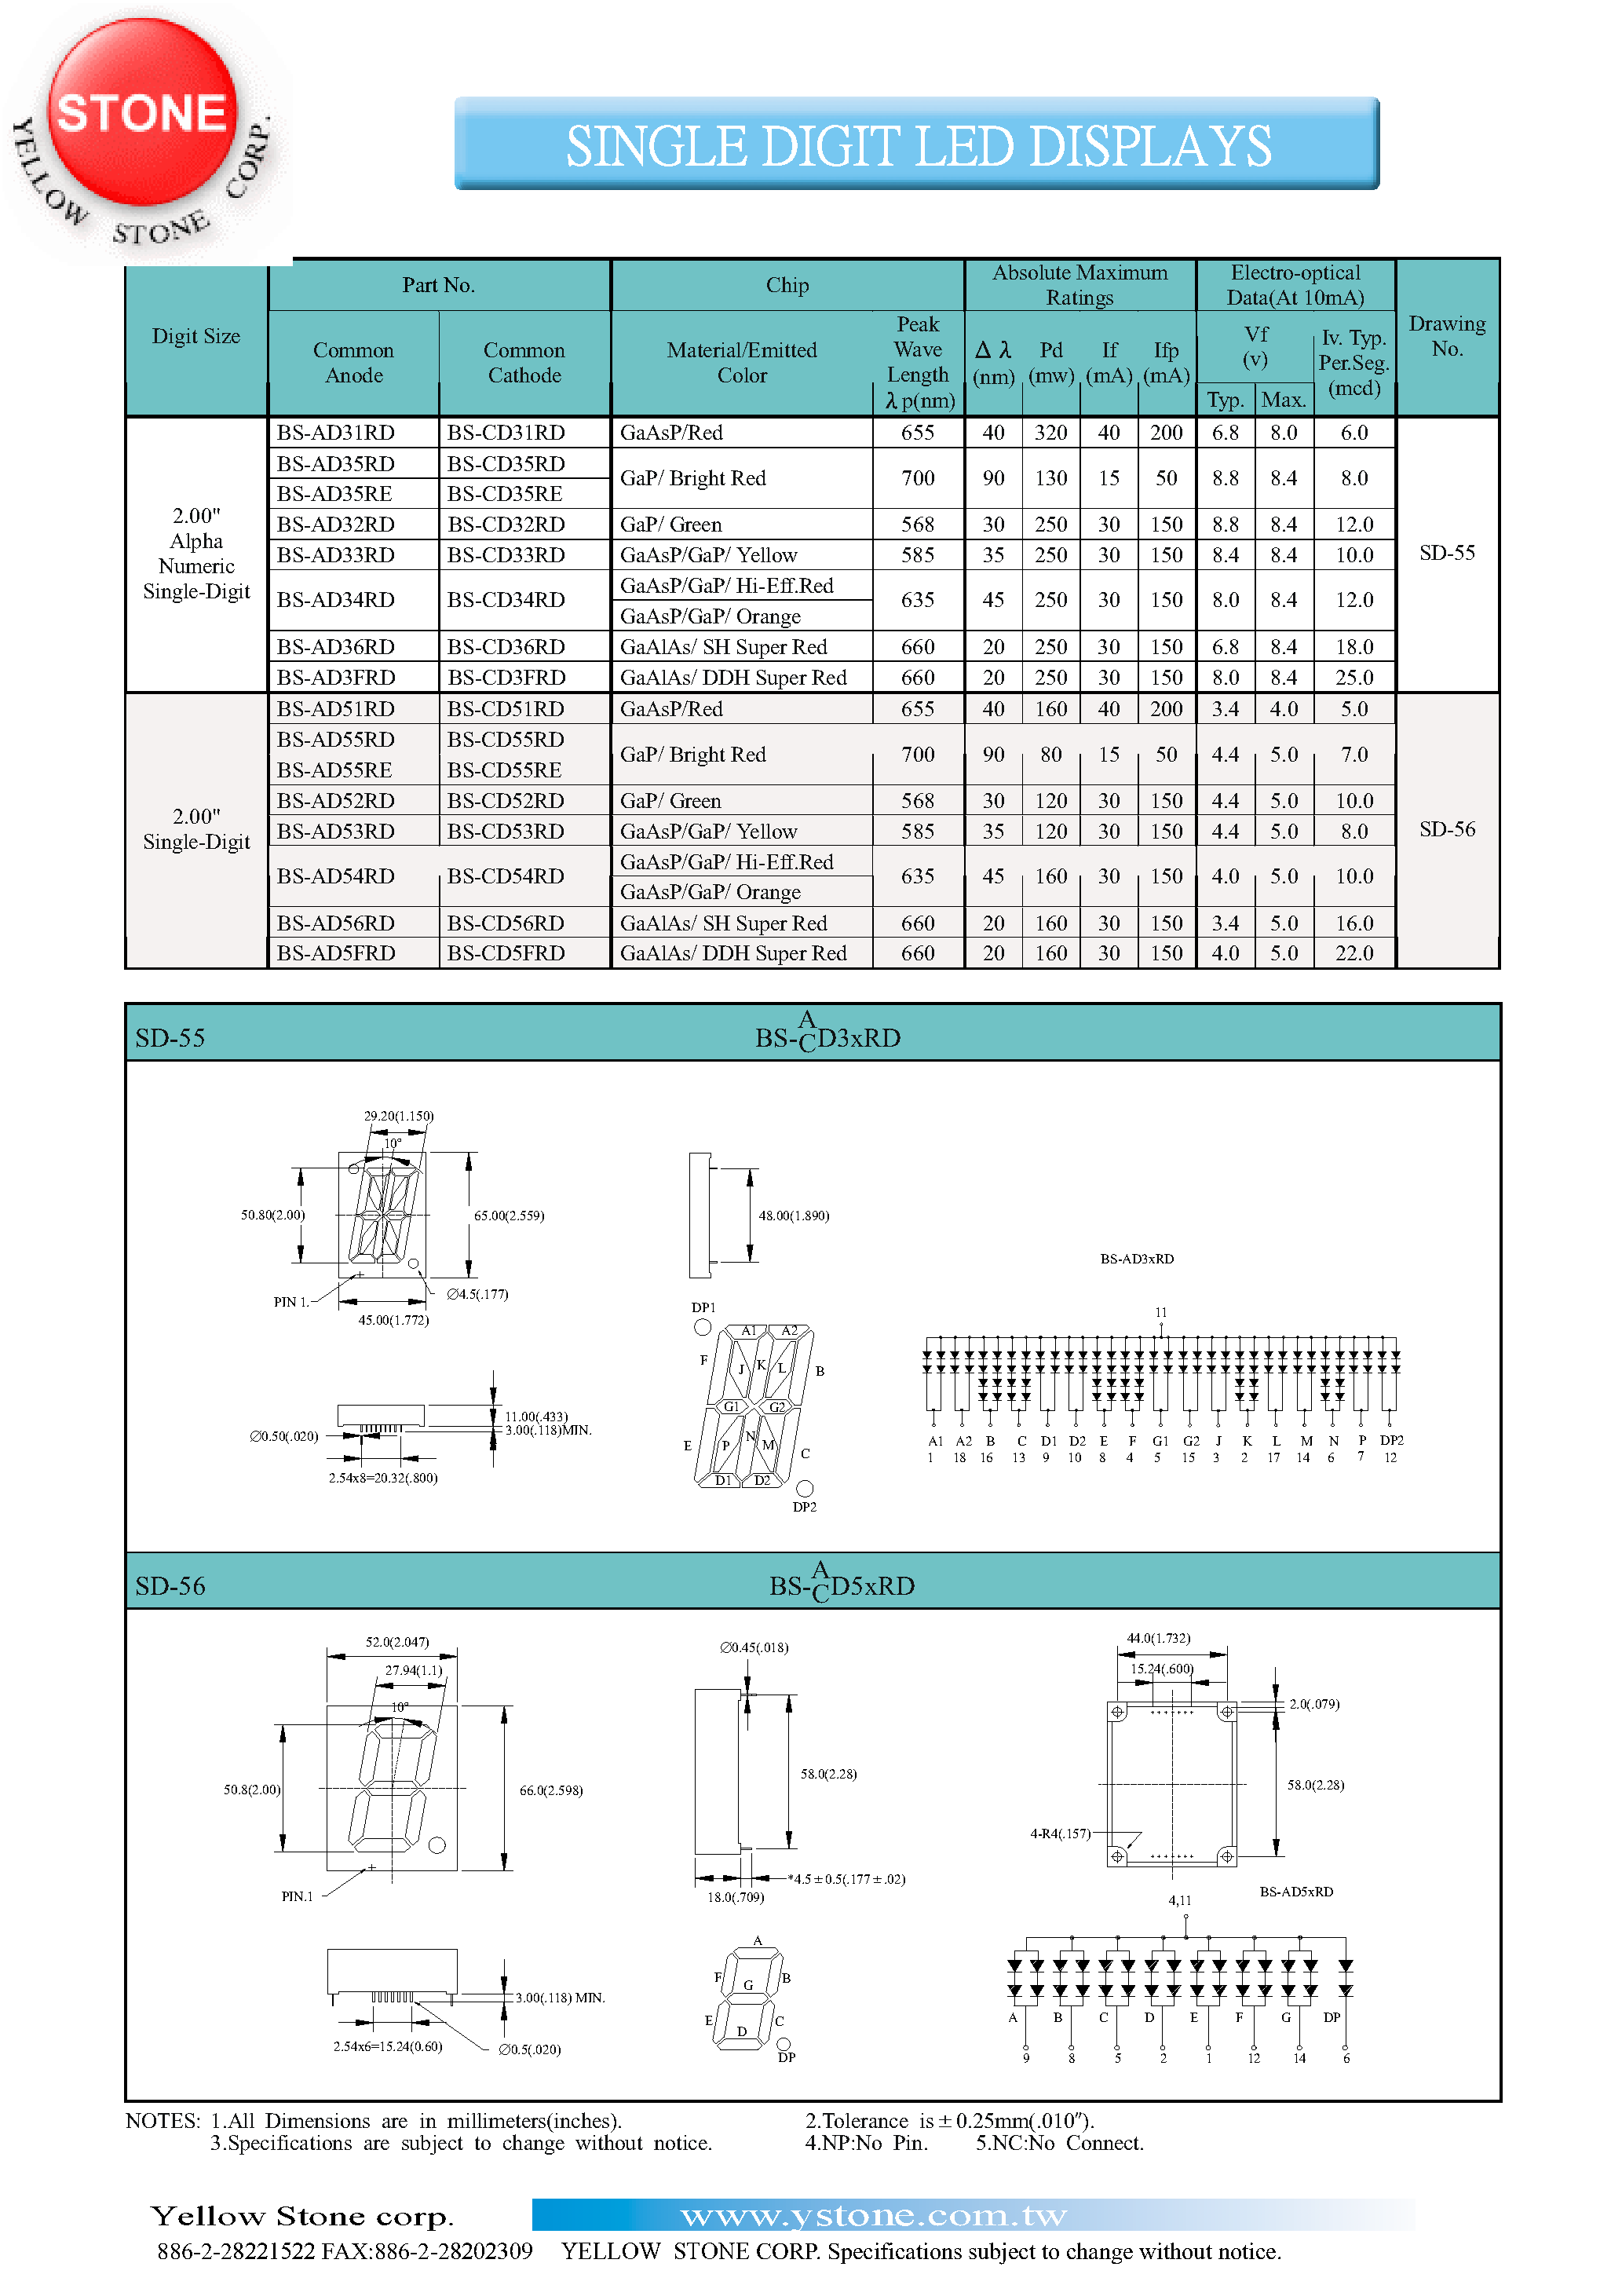 Datasheet BS-AD5FRD - SINGLE DIGIT LED DISPLAYS page 1